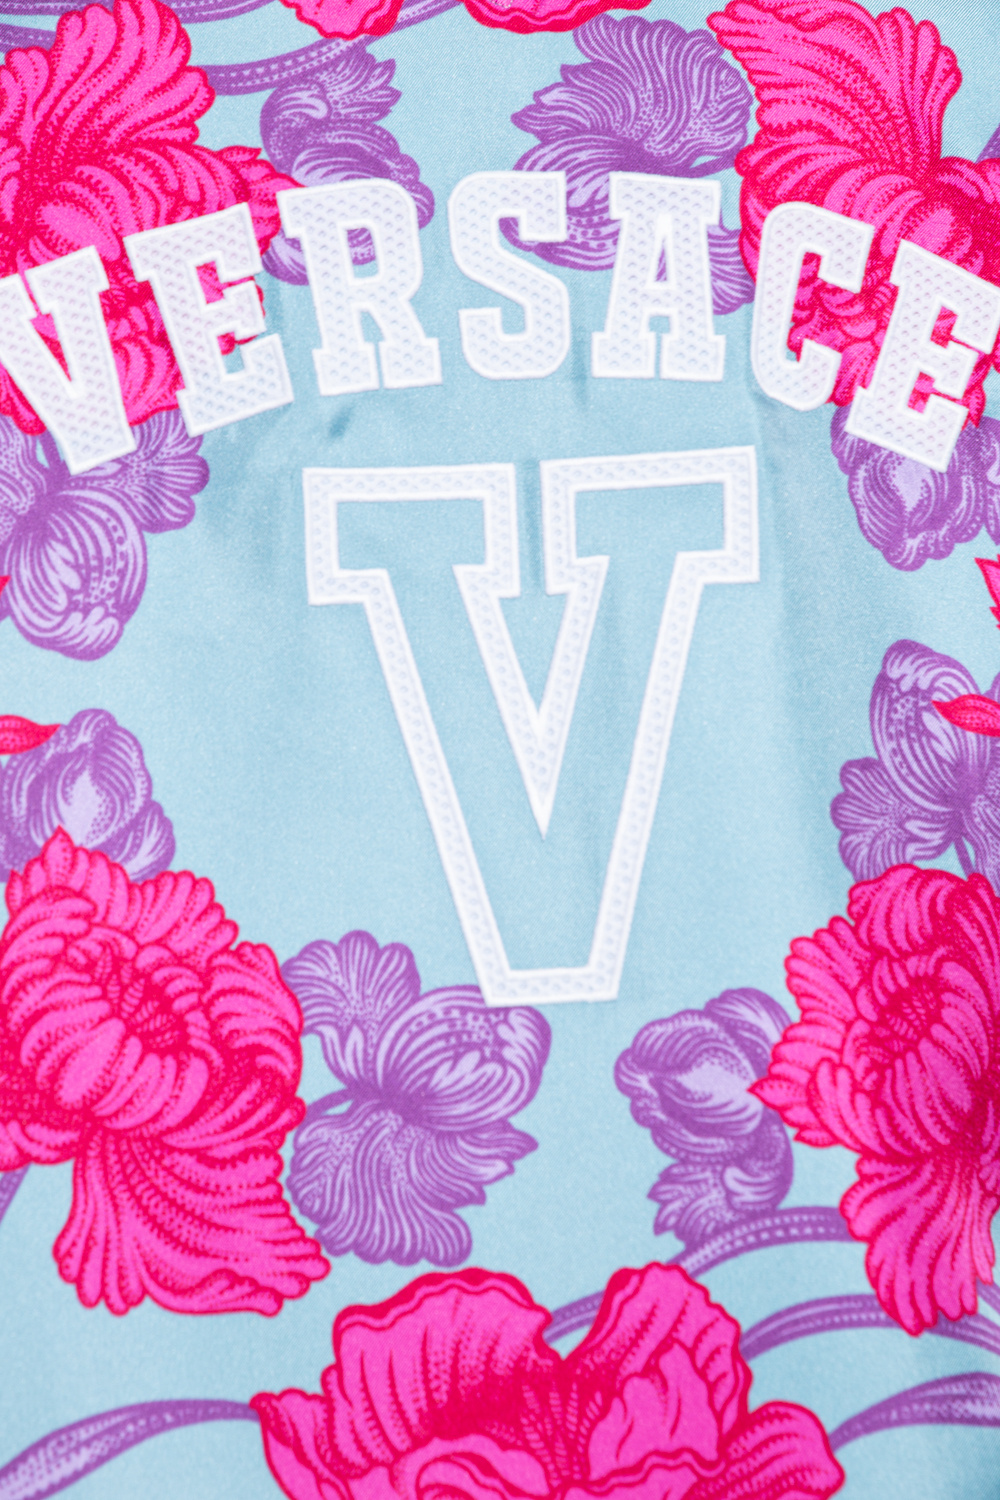 Versace saint laurent stripe print detail shirt item